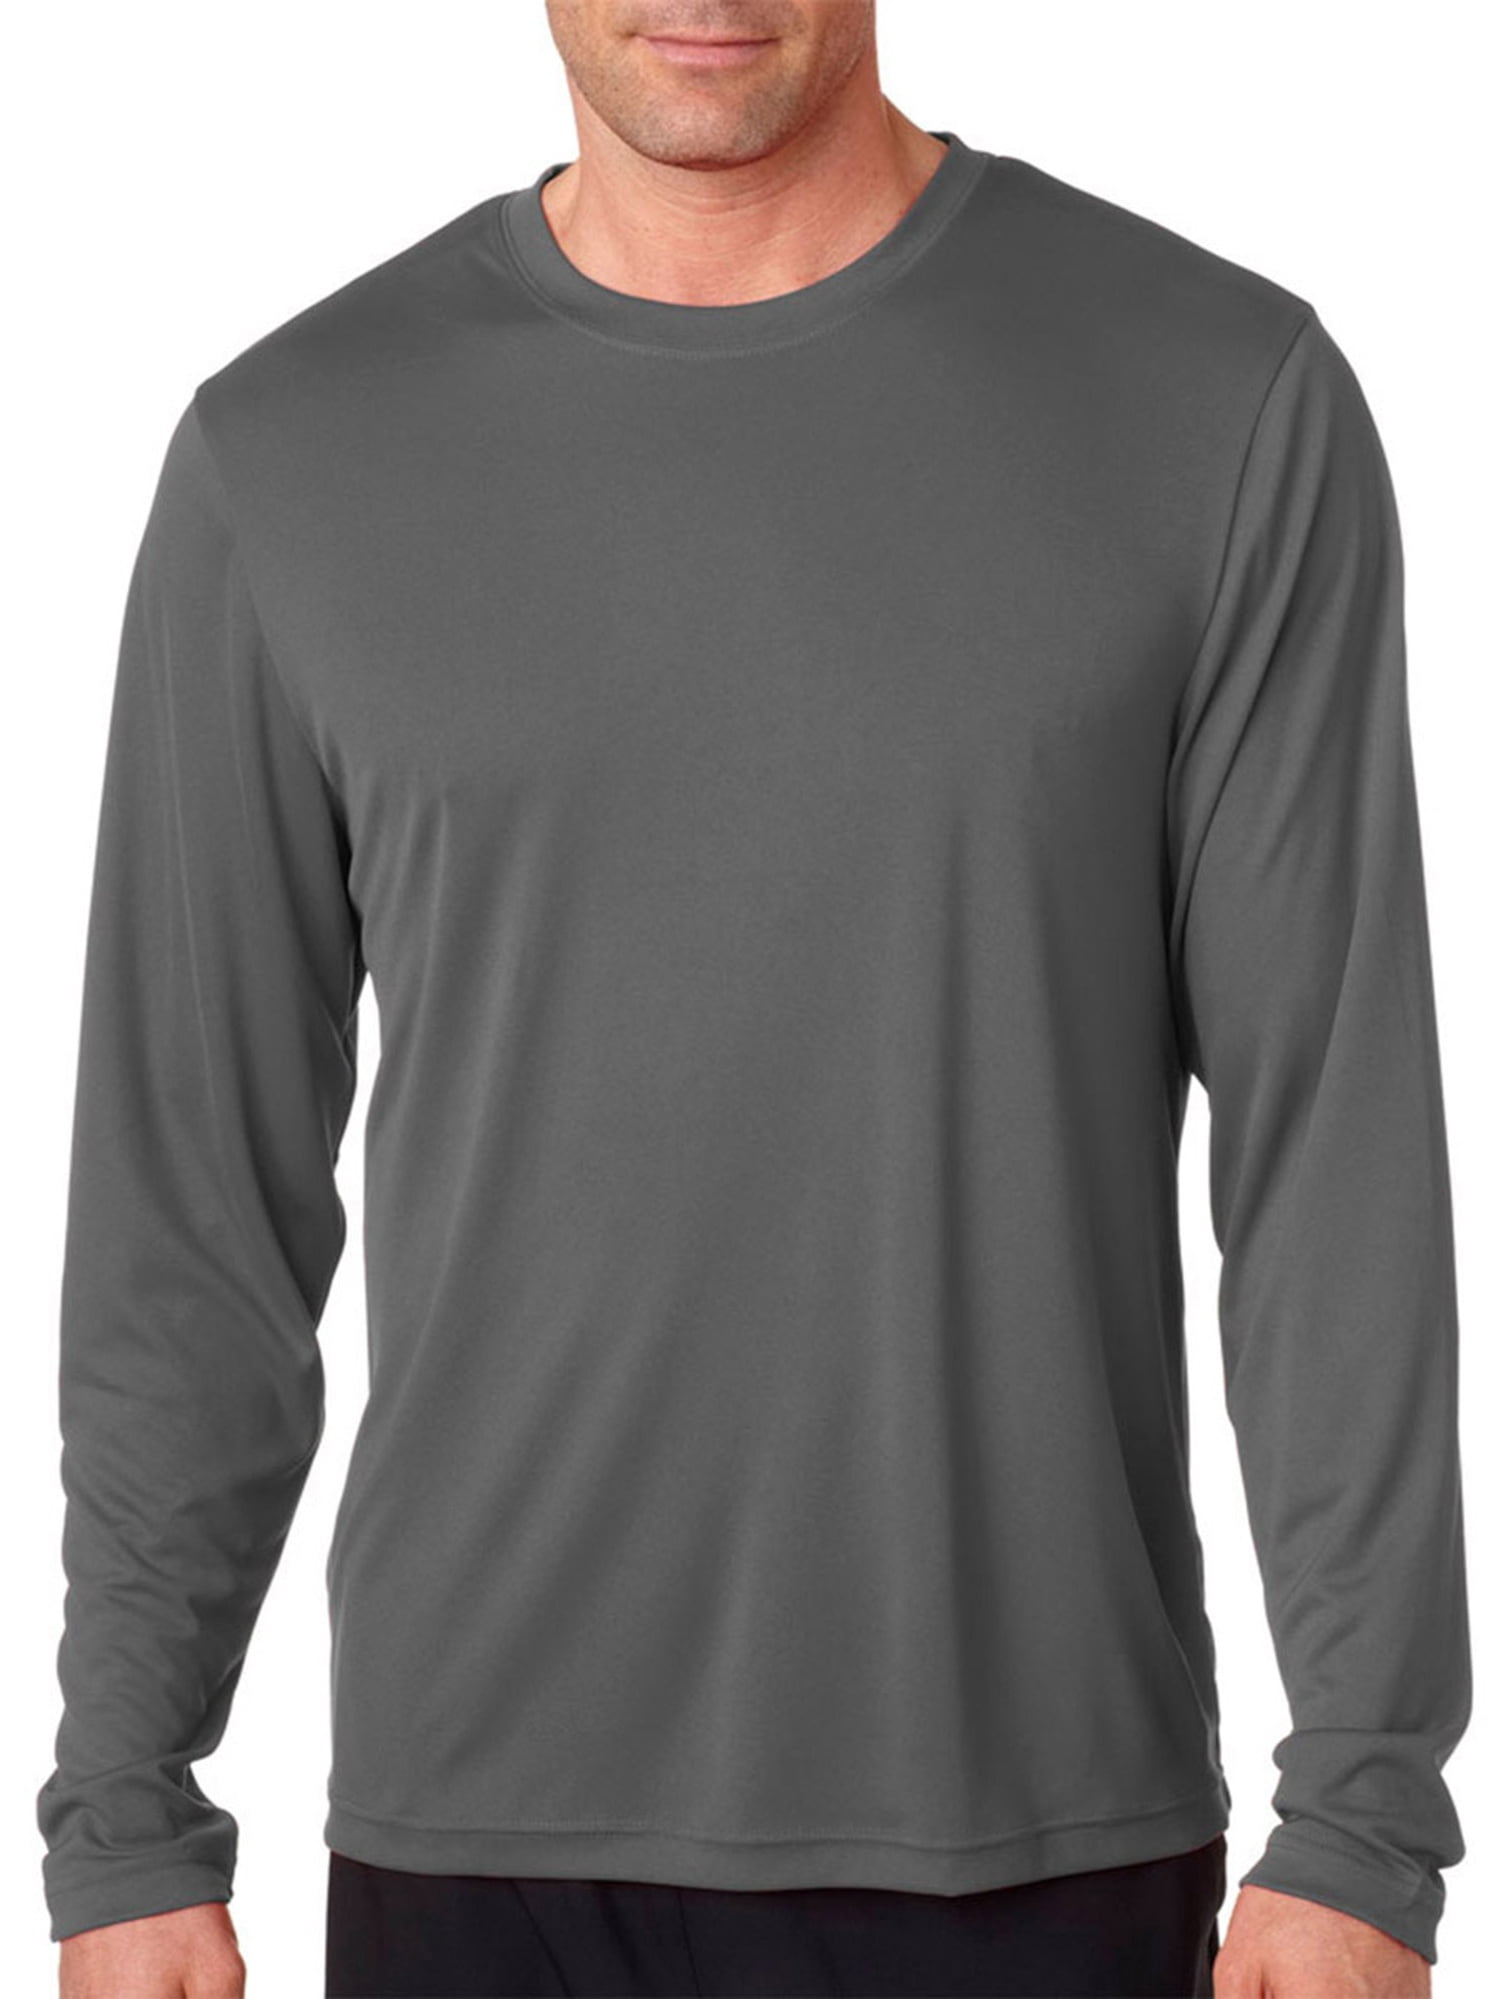 Hanes Men's Long-Sleeve Crewneck Performance T-Shirt - Walmart.com